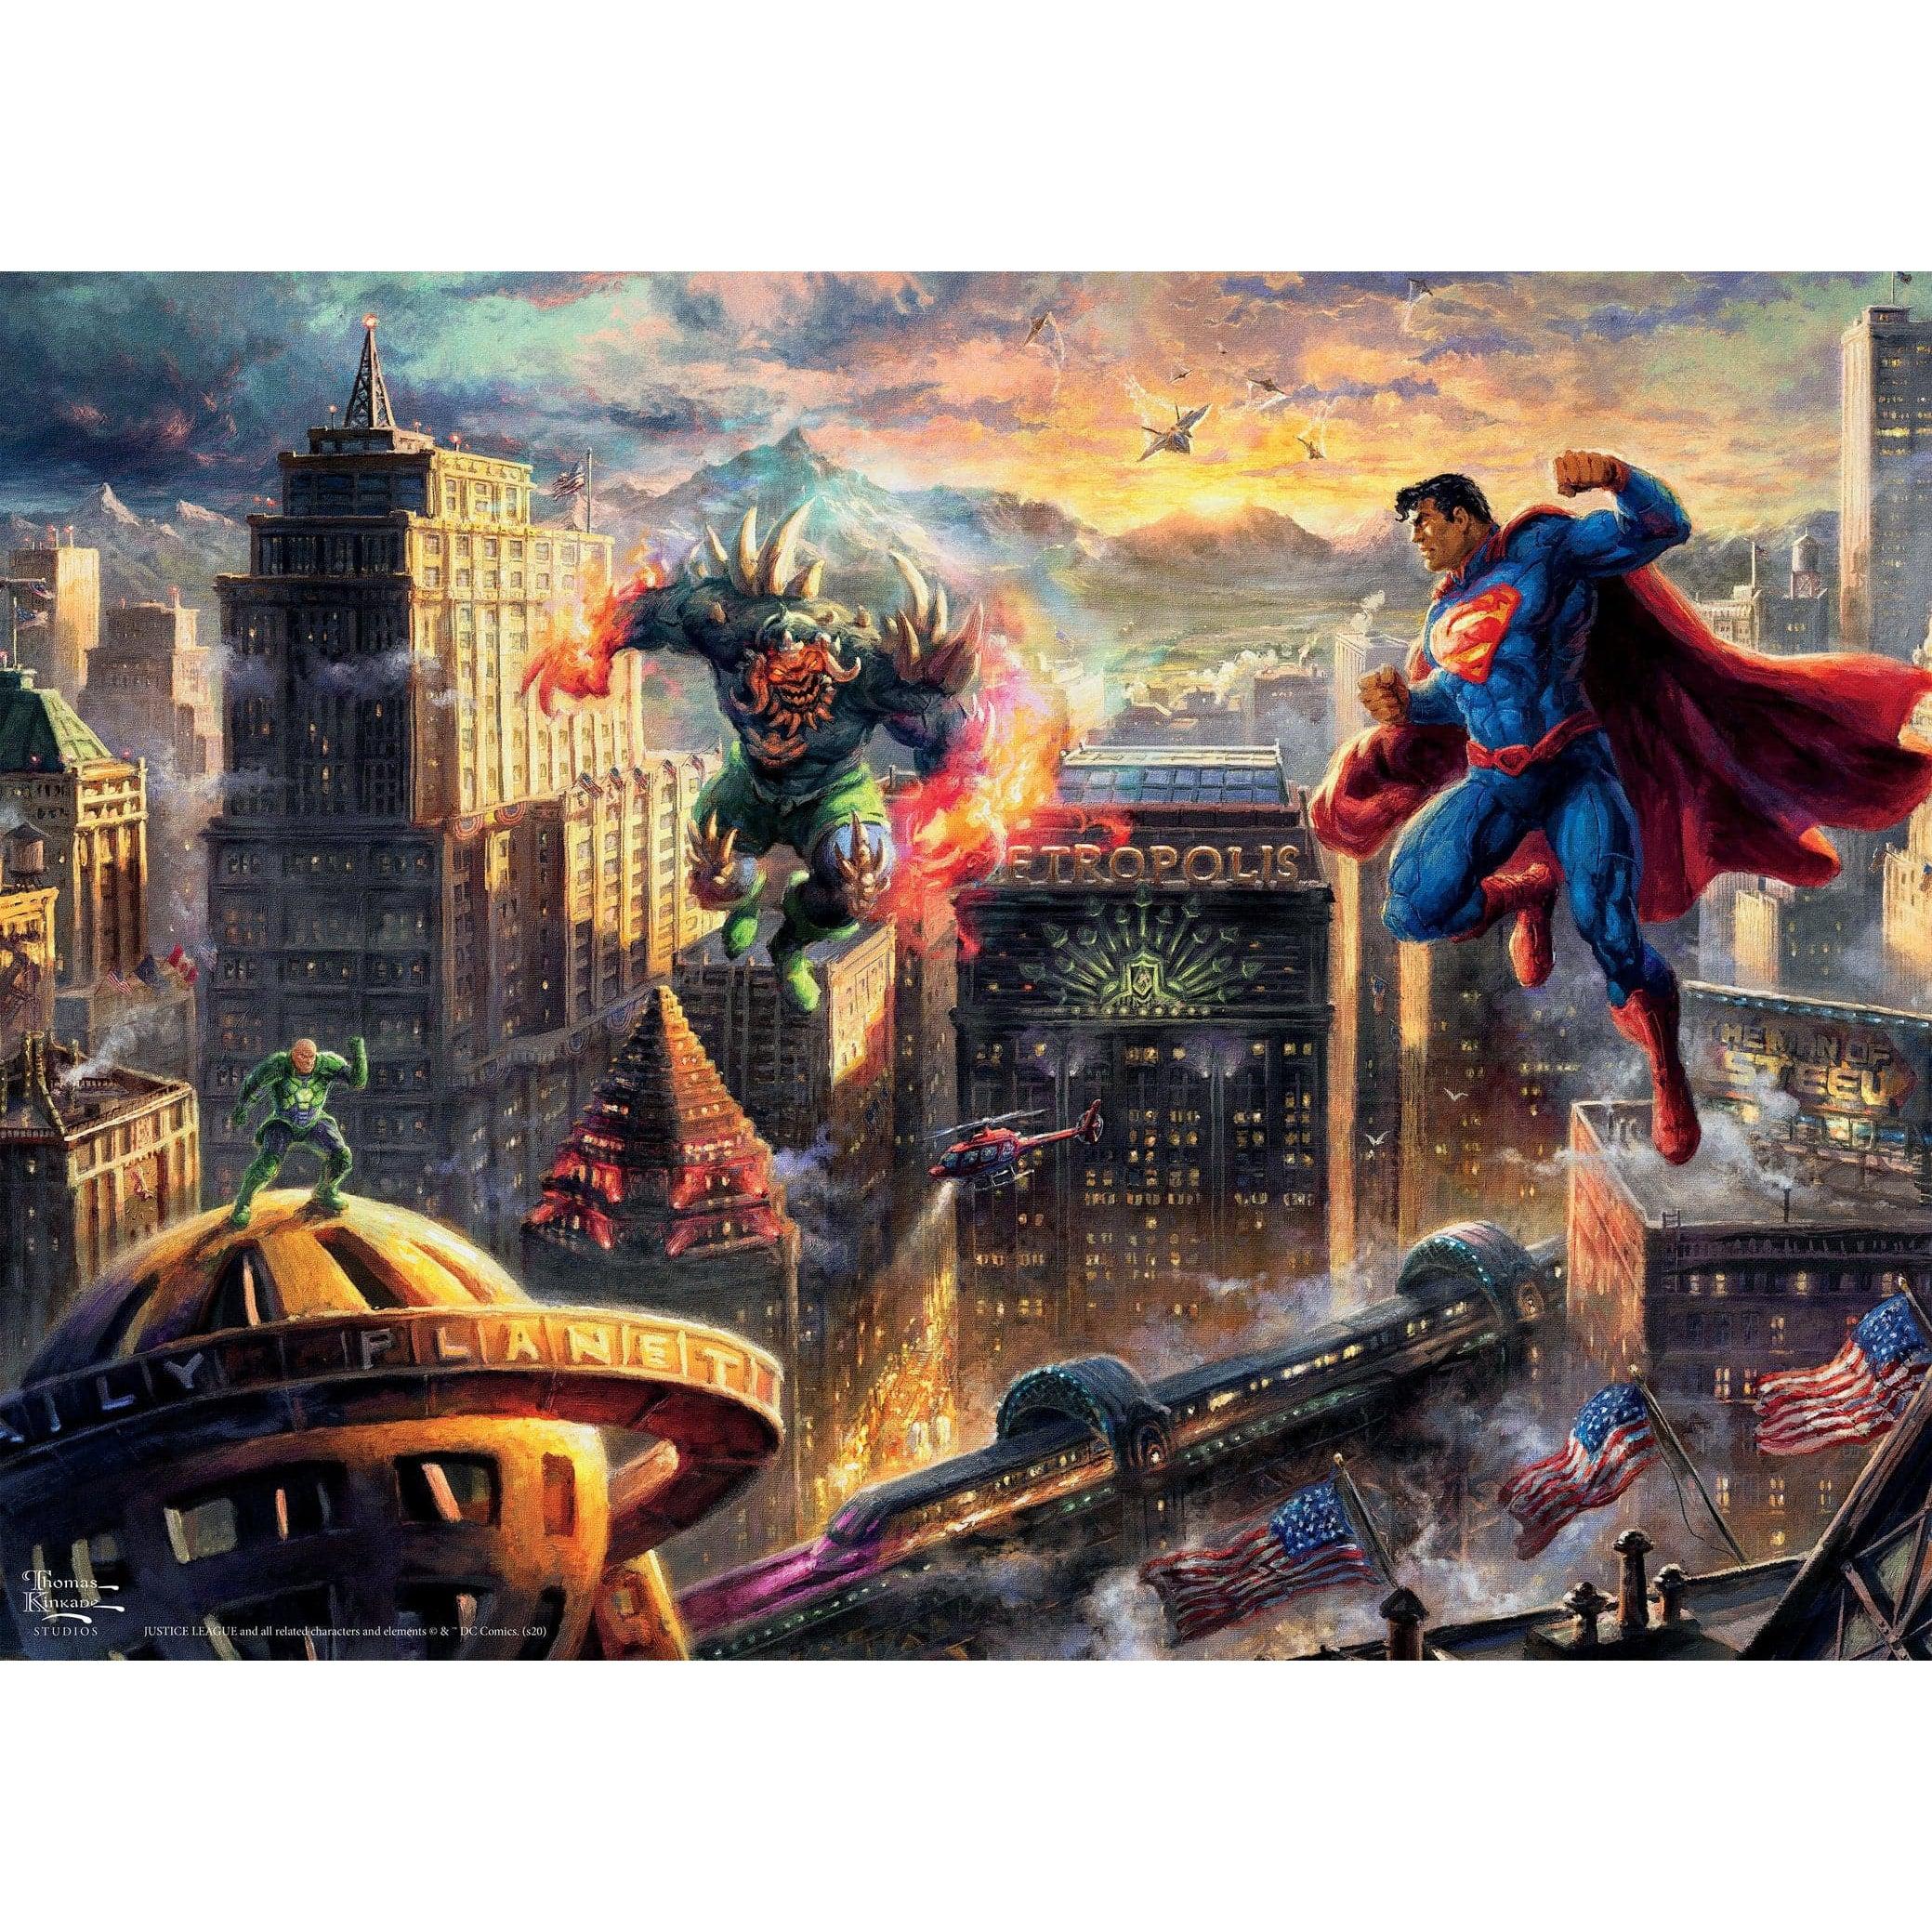 Ceaco DC Comics Thomas Kinkade Gotham City 1000 Piece Jigsaw Puzzle